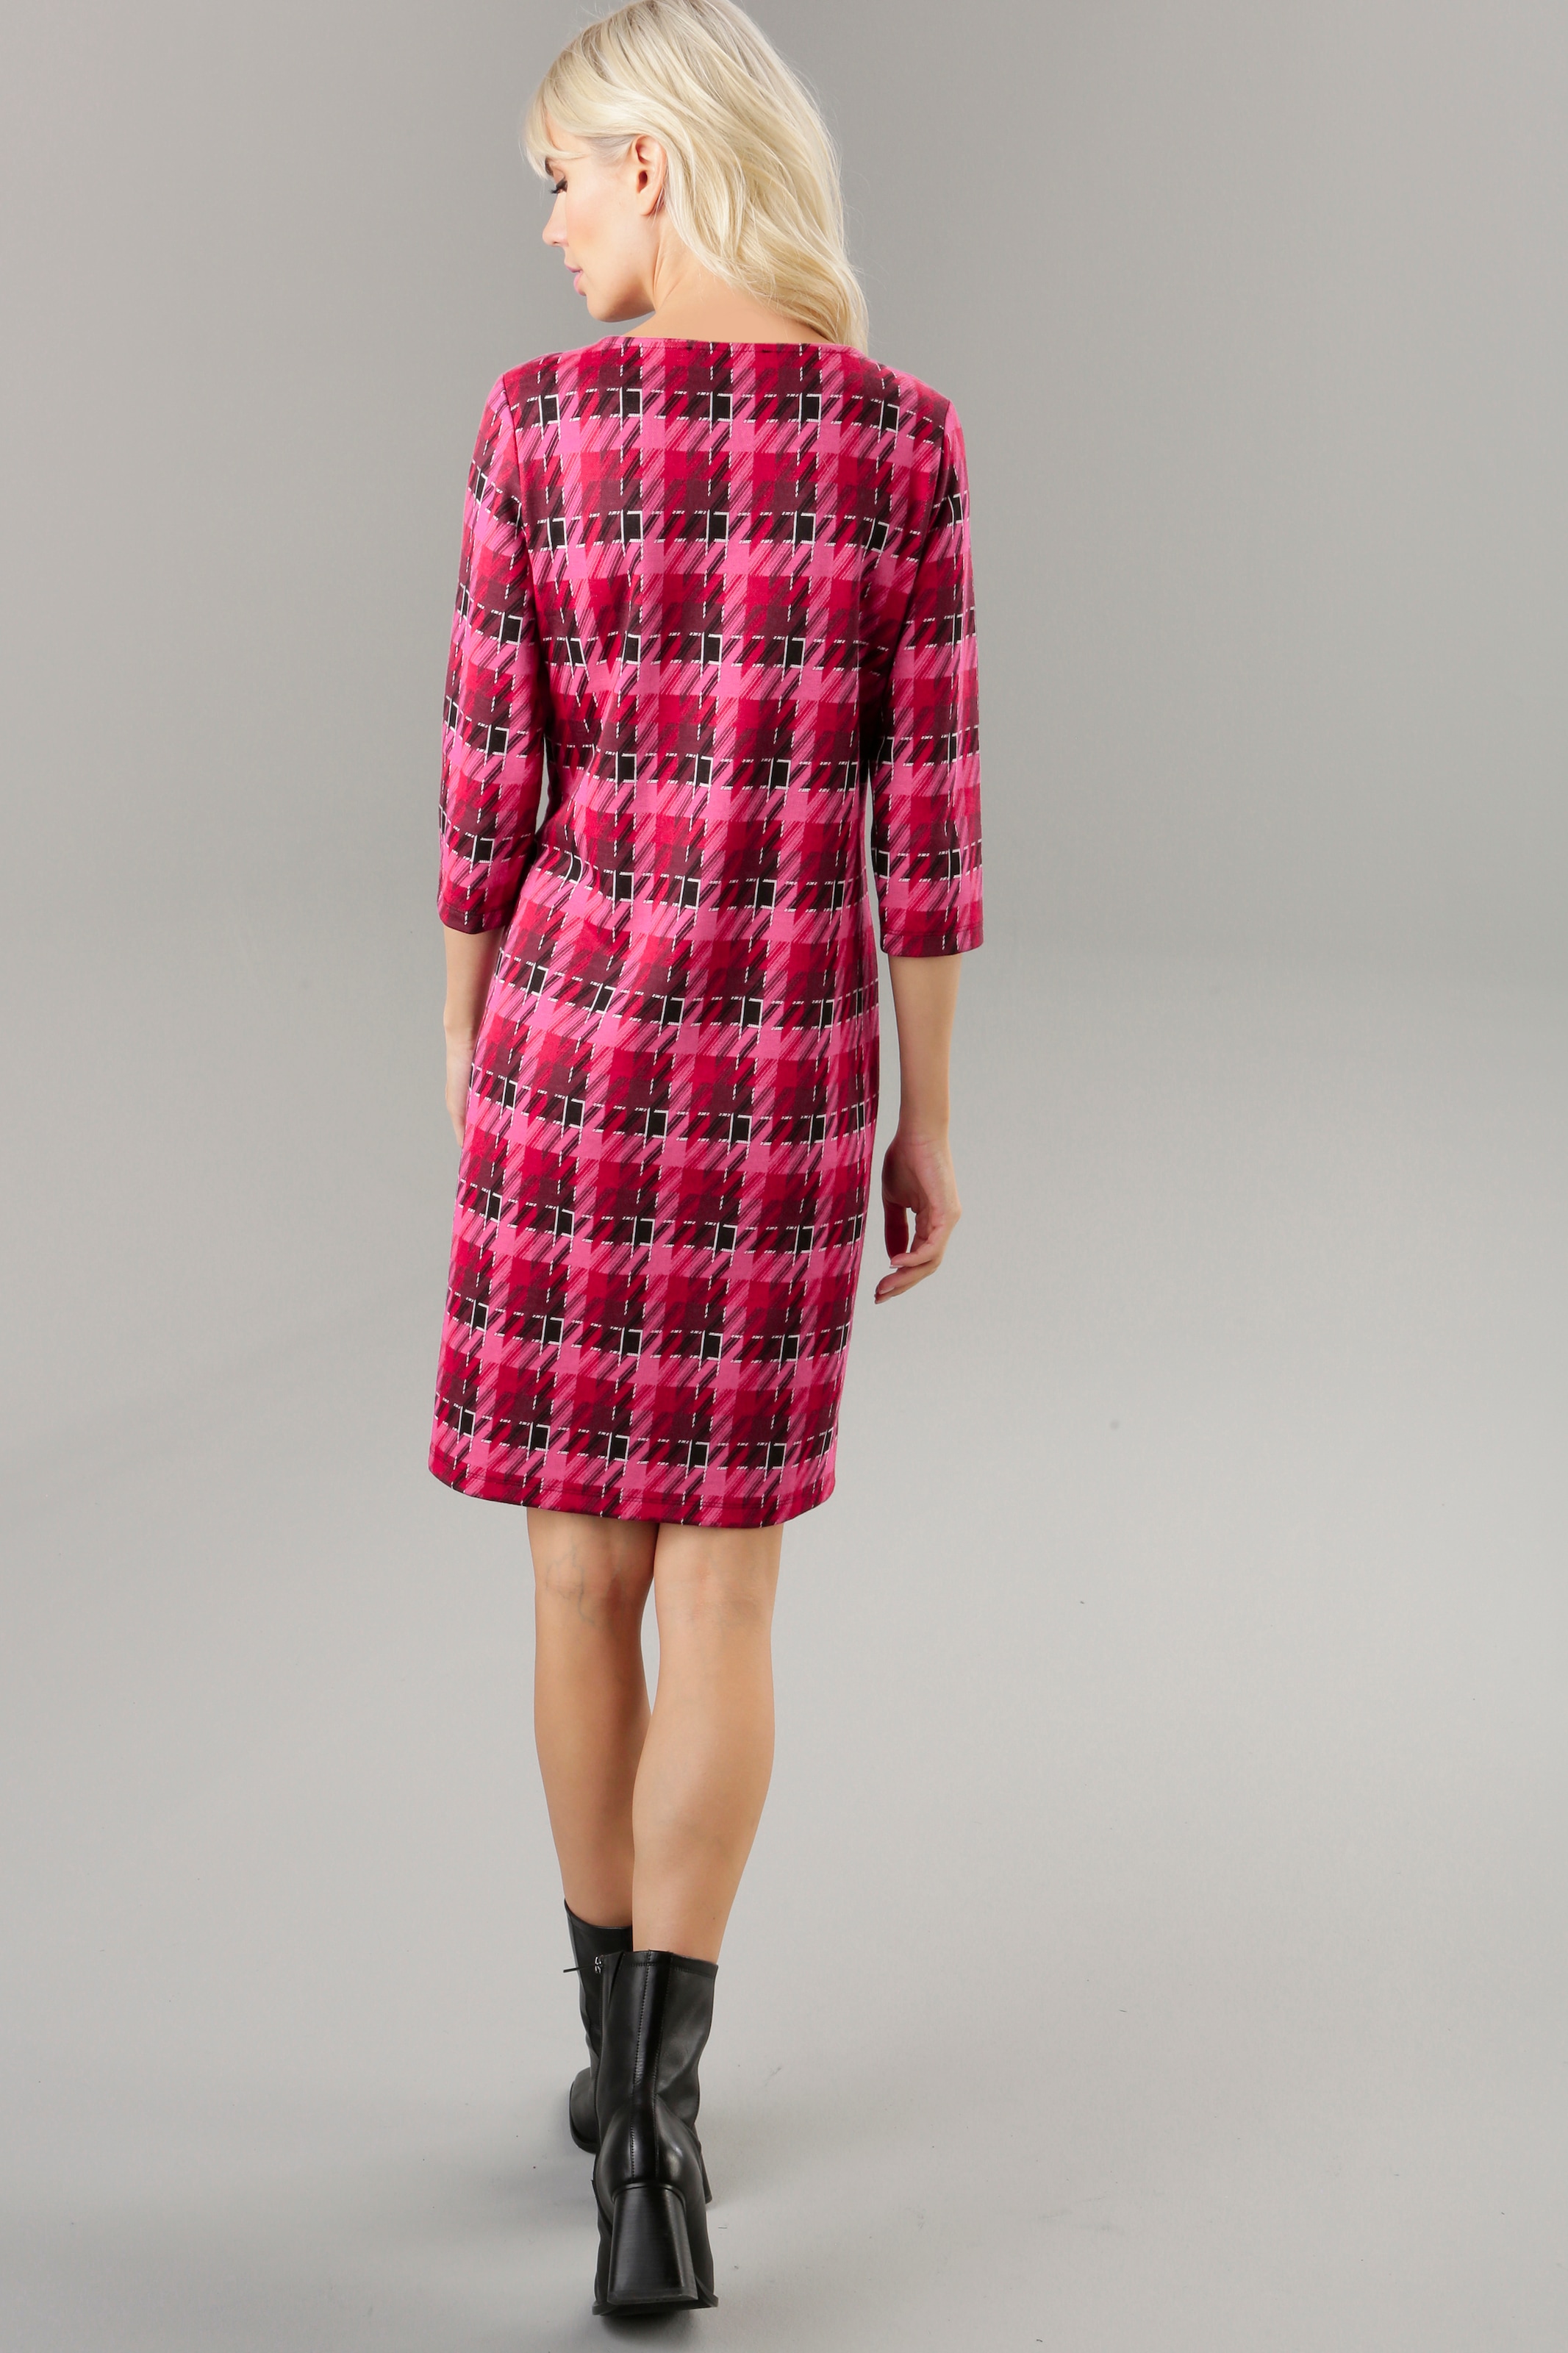 Aniston SELECTED Jerseykleid, Knallfarben trendy mit online in Allover-Muster bei OTTO bestellen